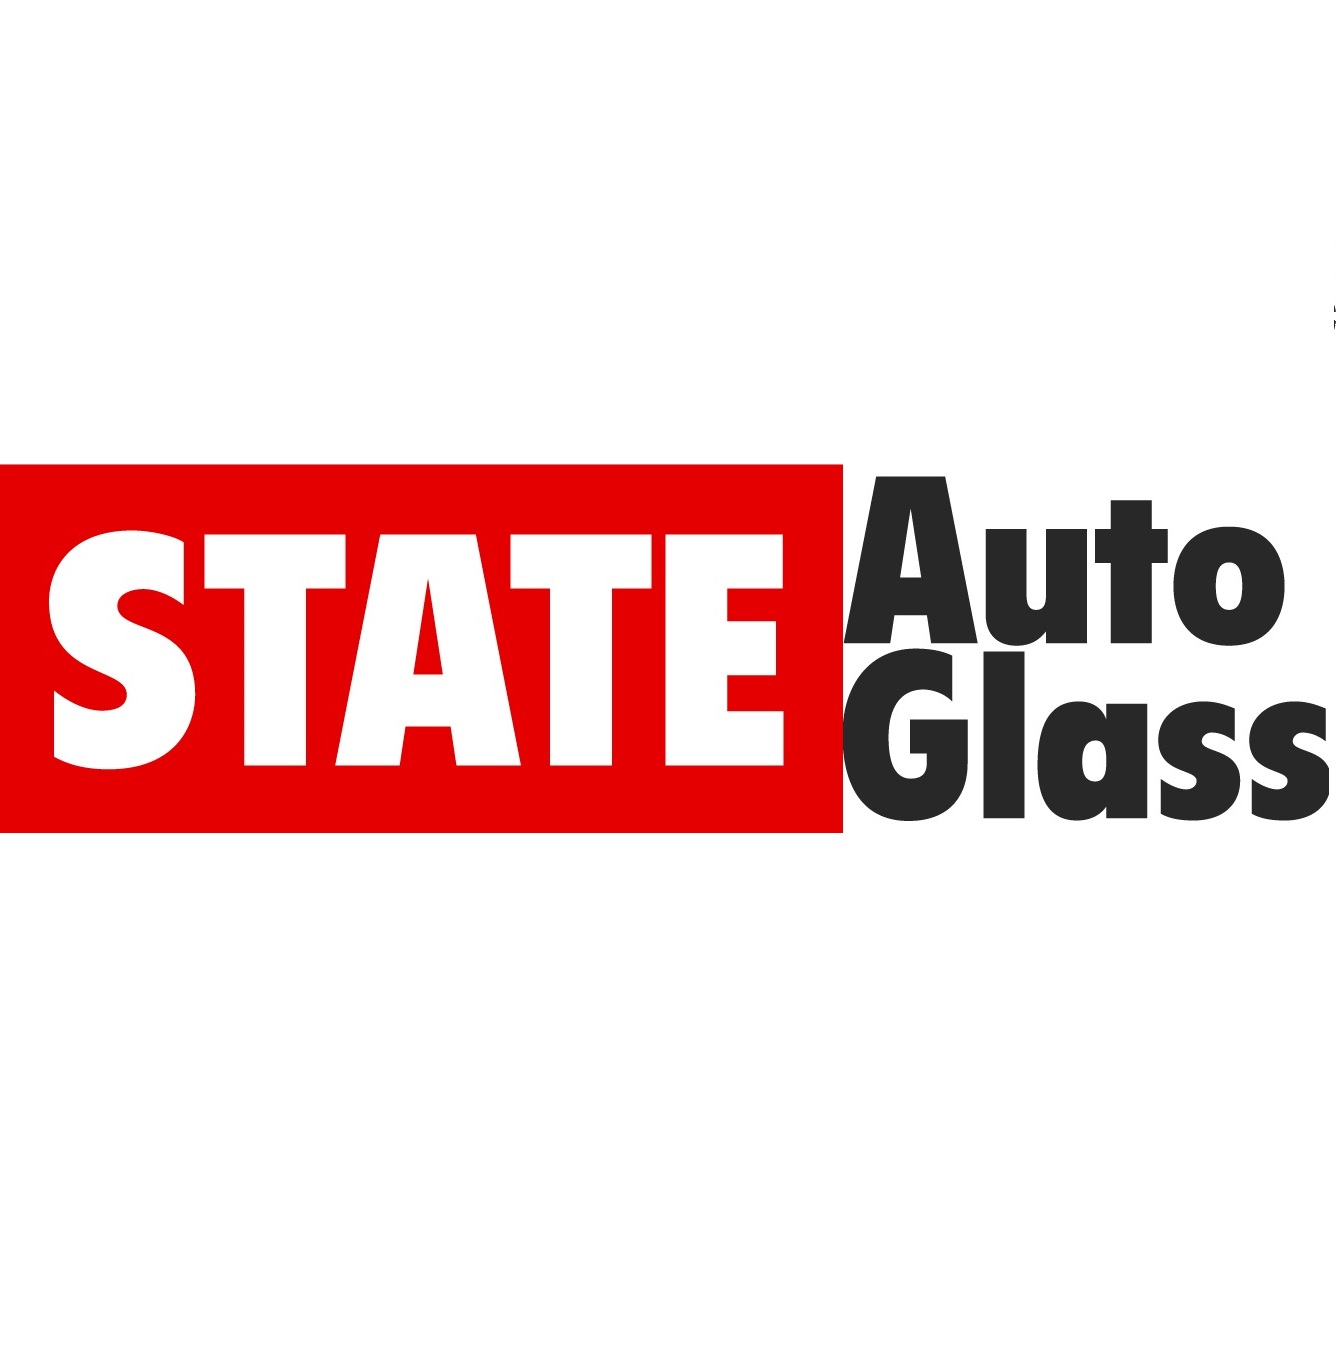 State Auto Glass